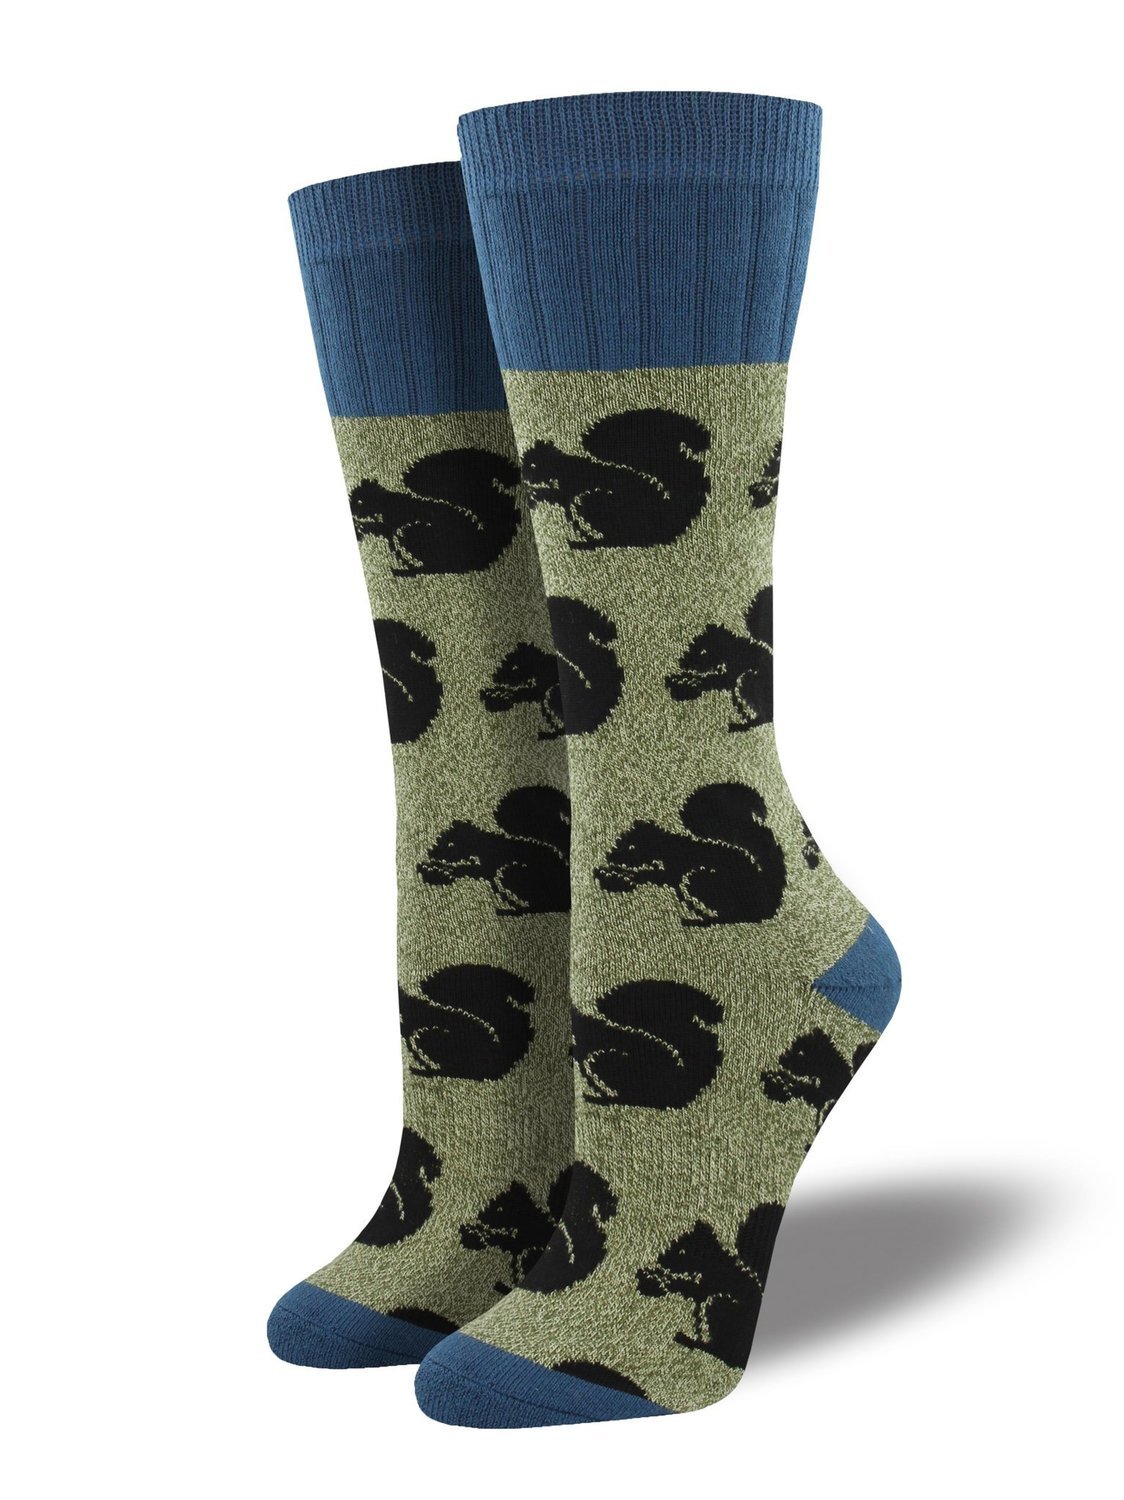 Sock Smith Outlands Squirrel Women's Socks